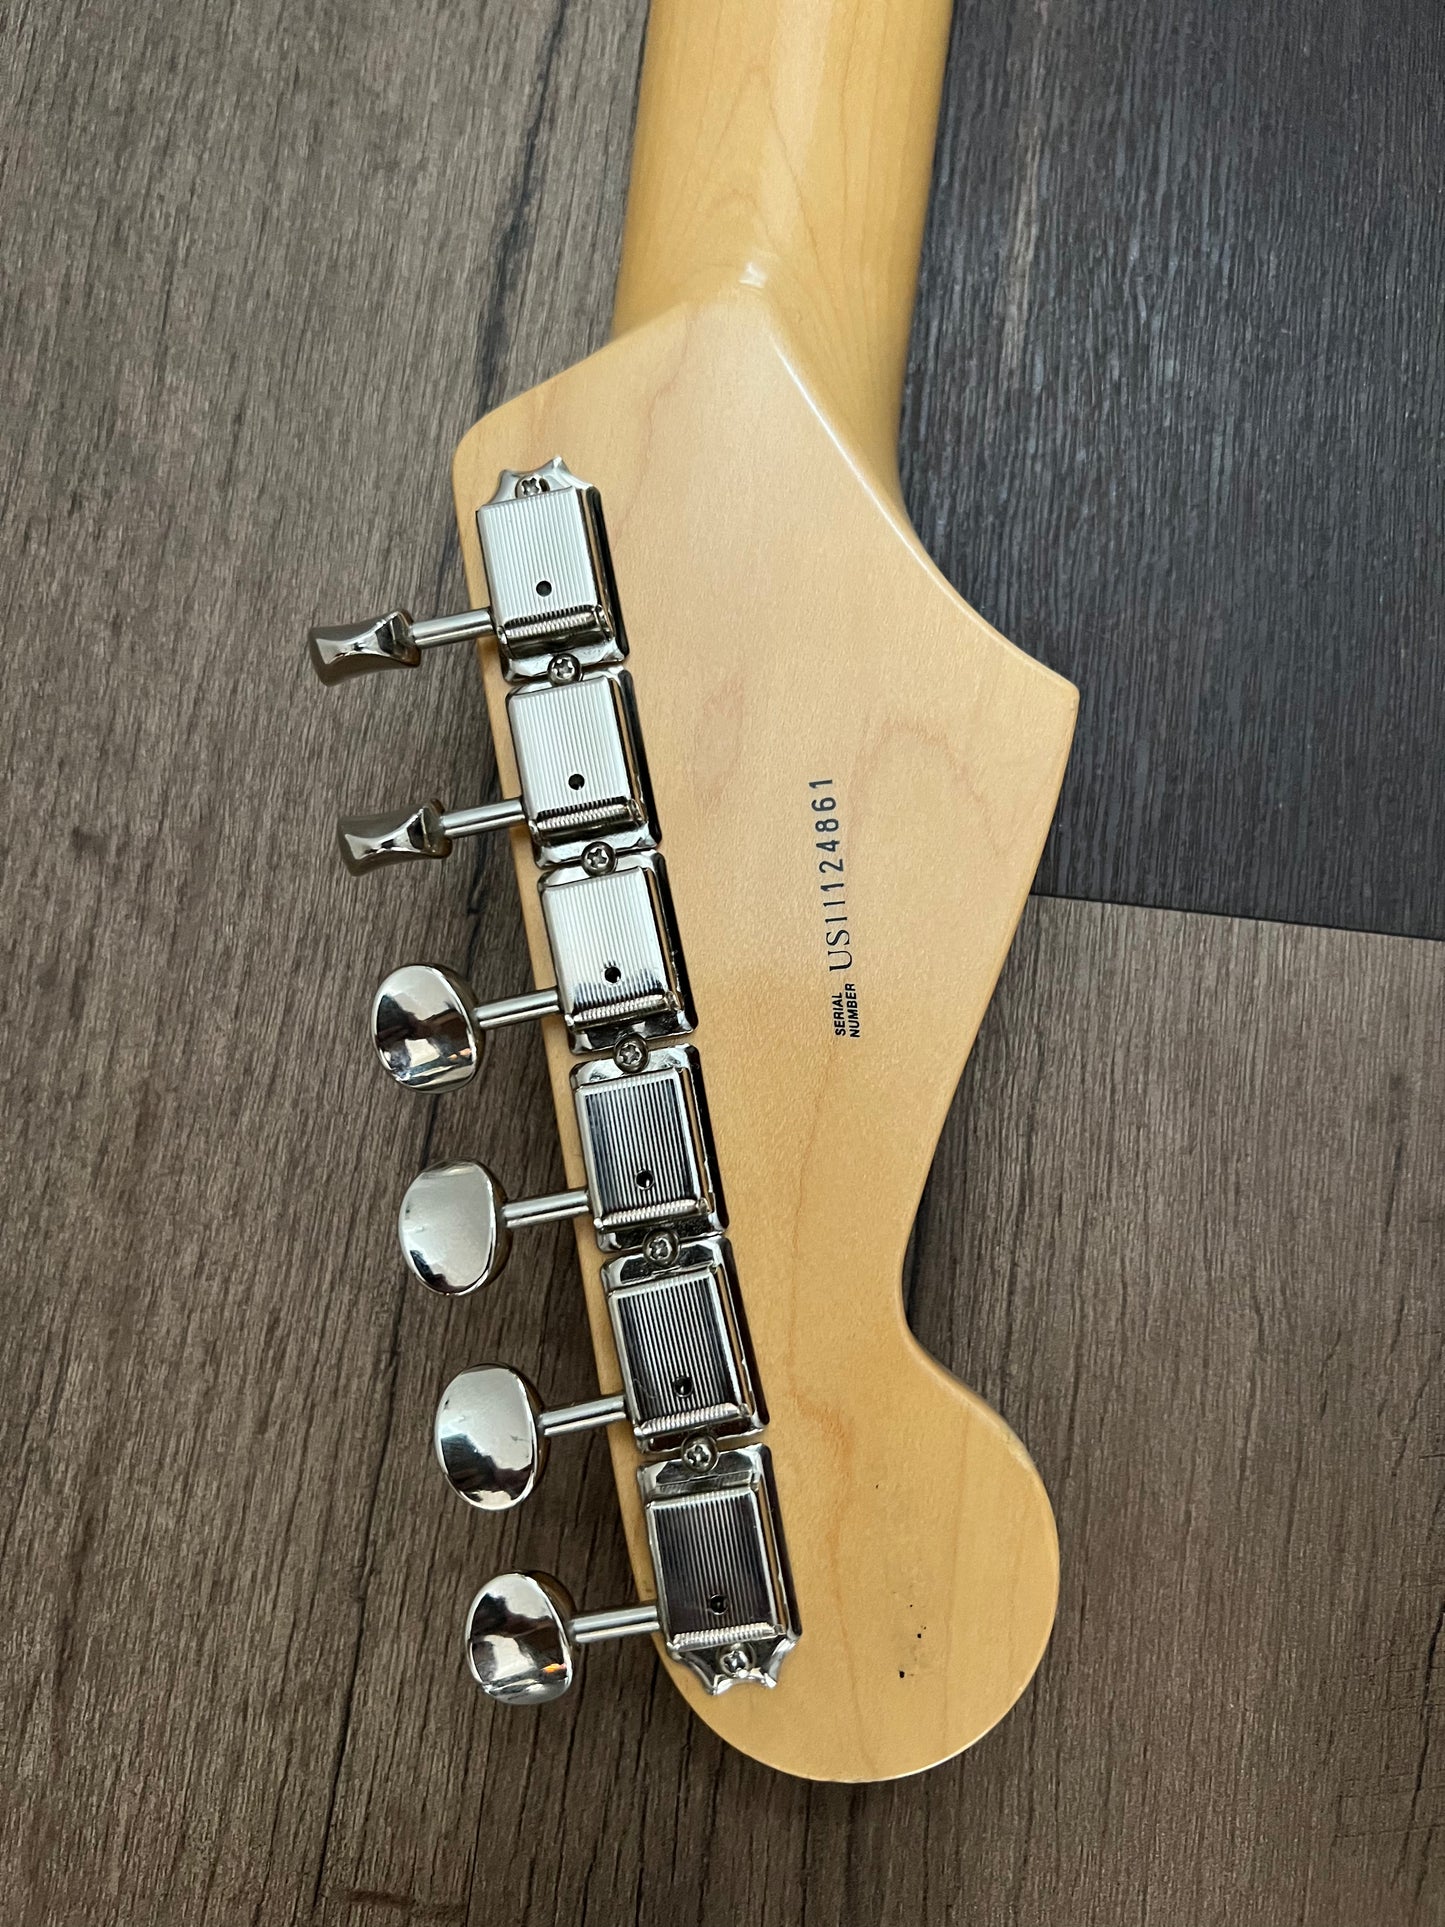 Fender Stratocaster Electric Guitar USA 2011